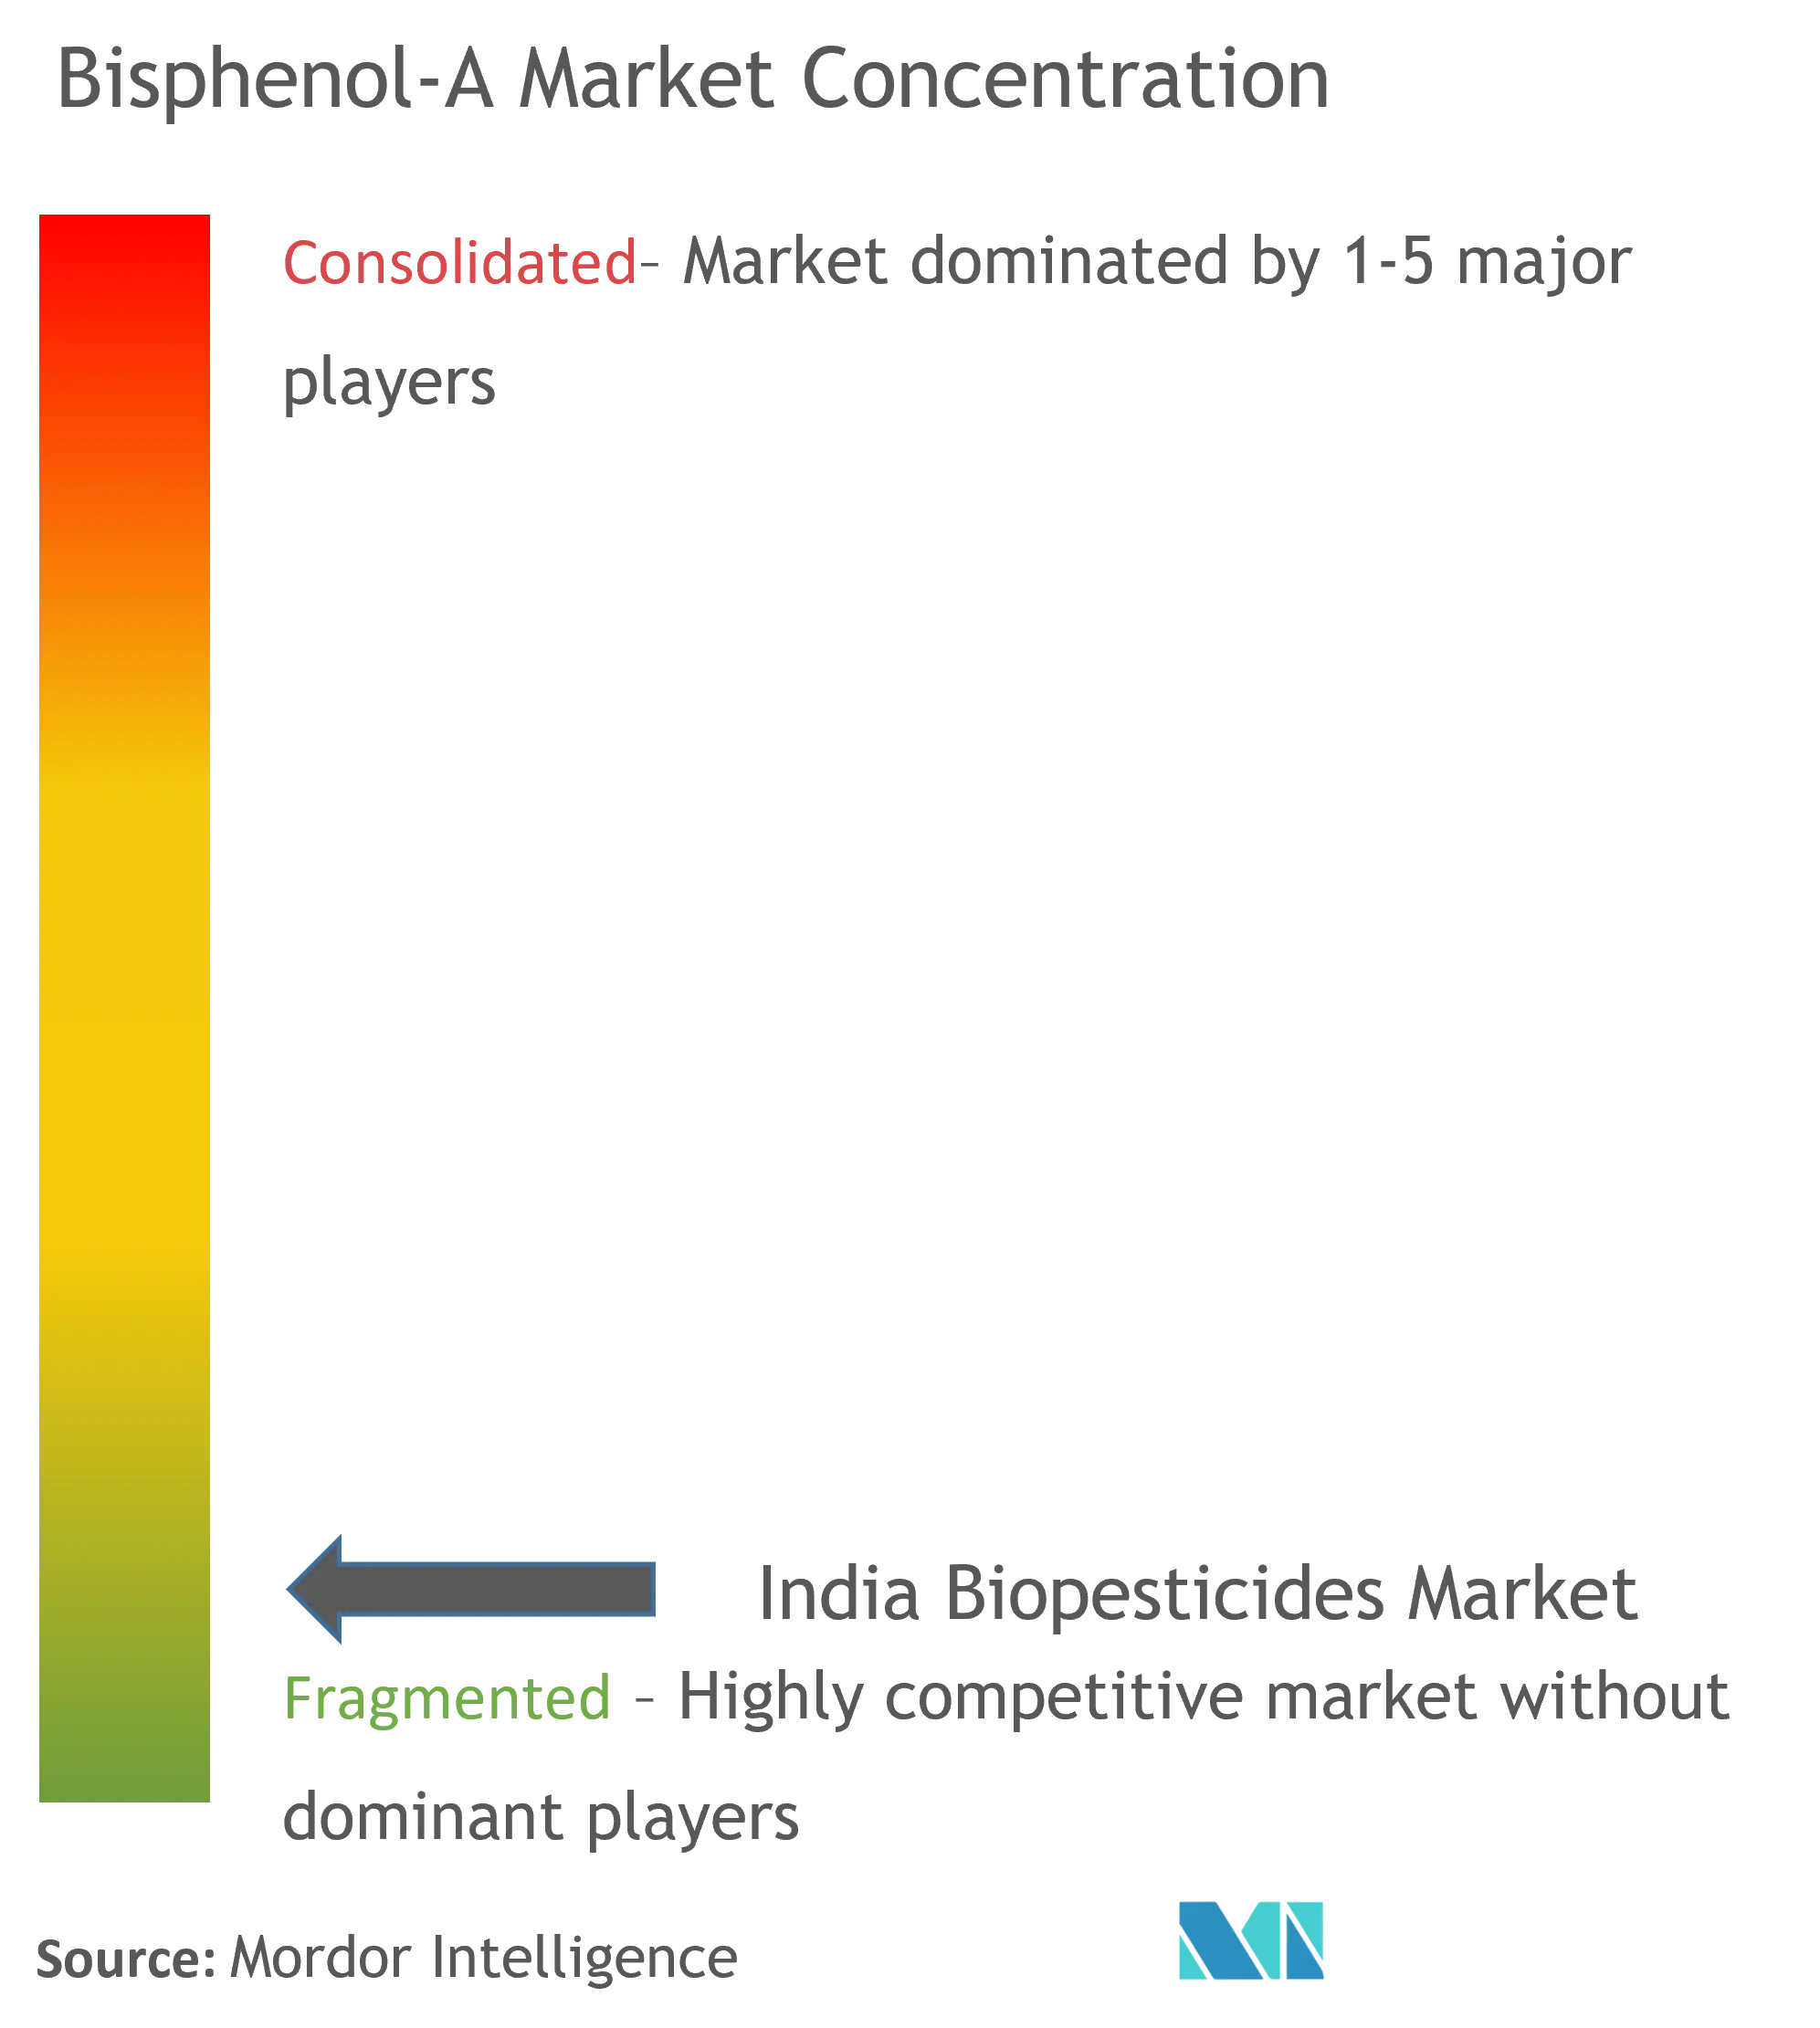 India Biopesticides Market- Market Concentration.png